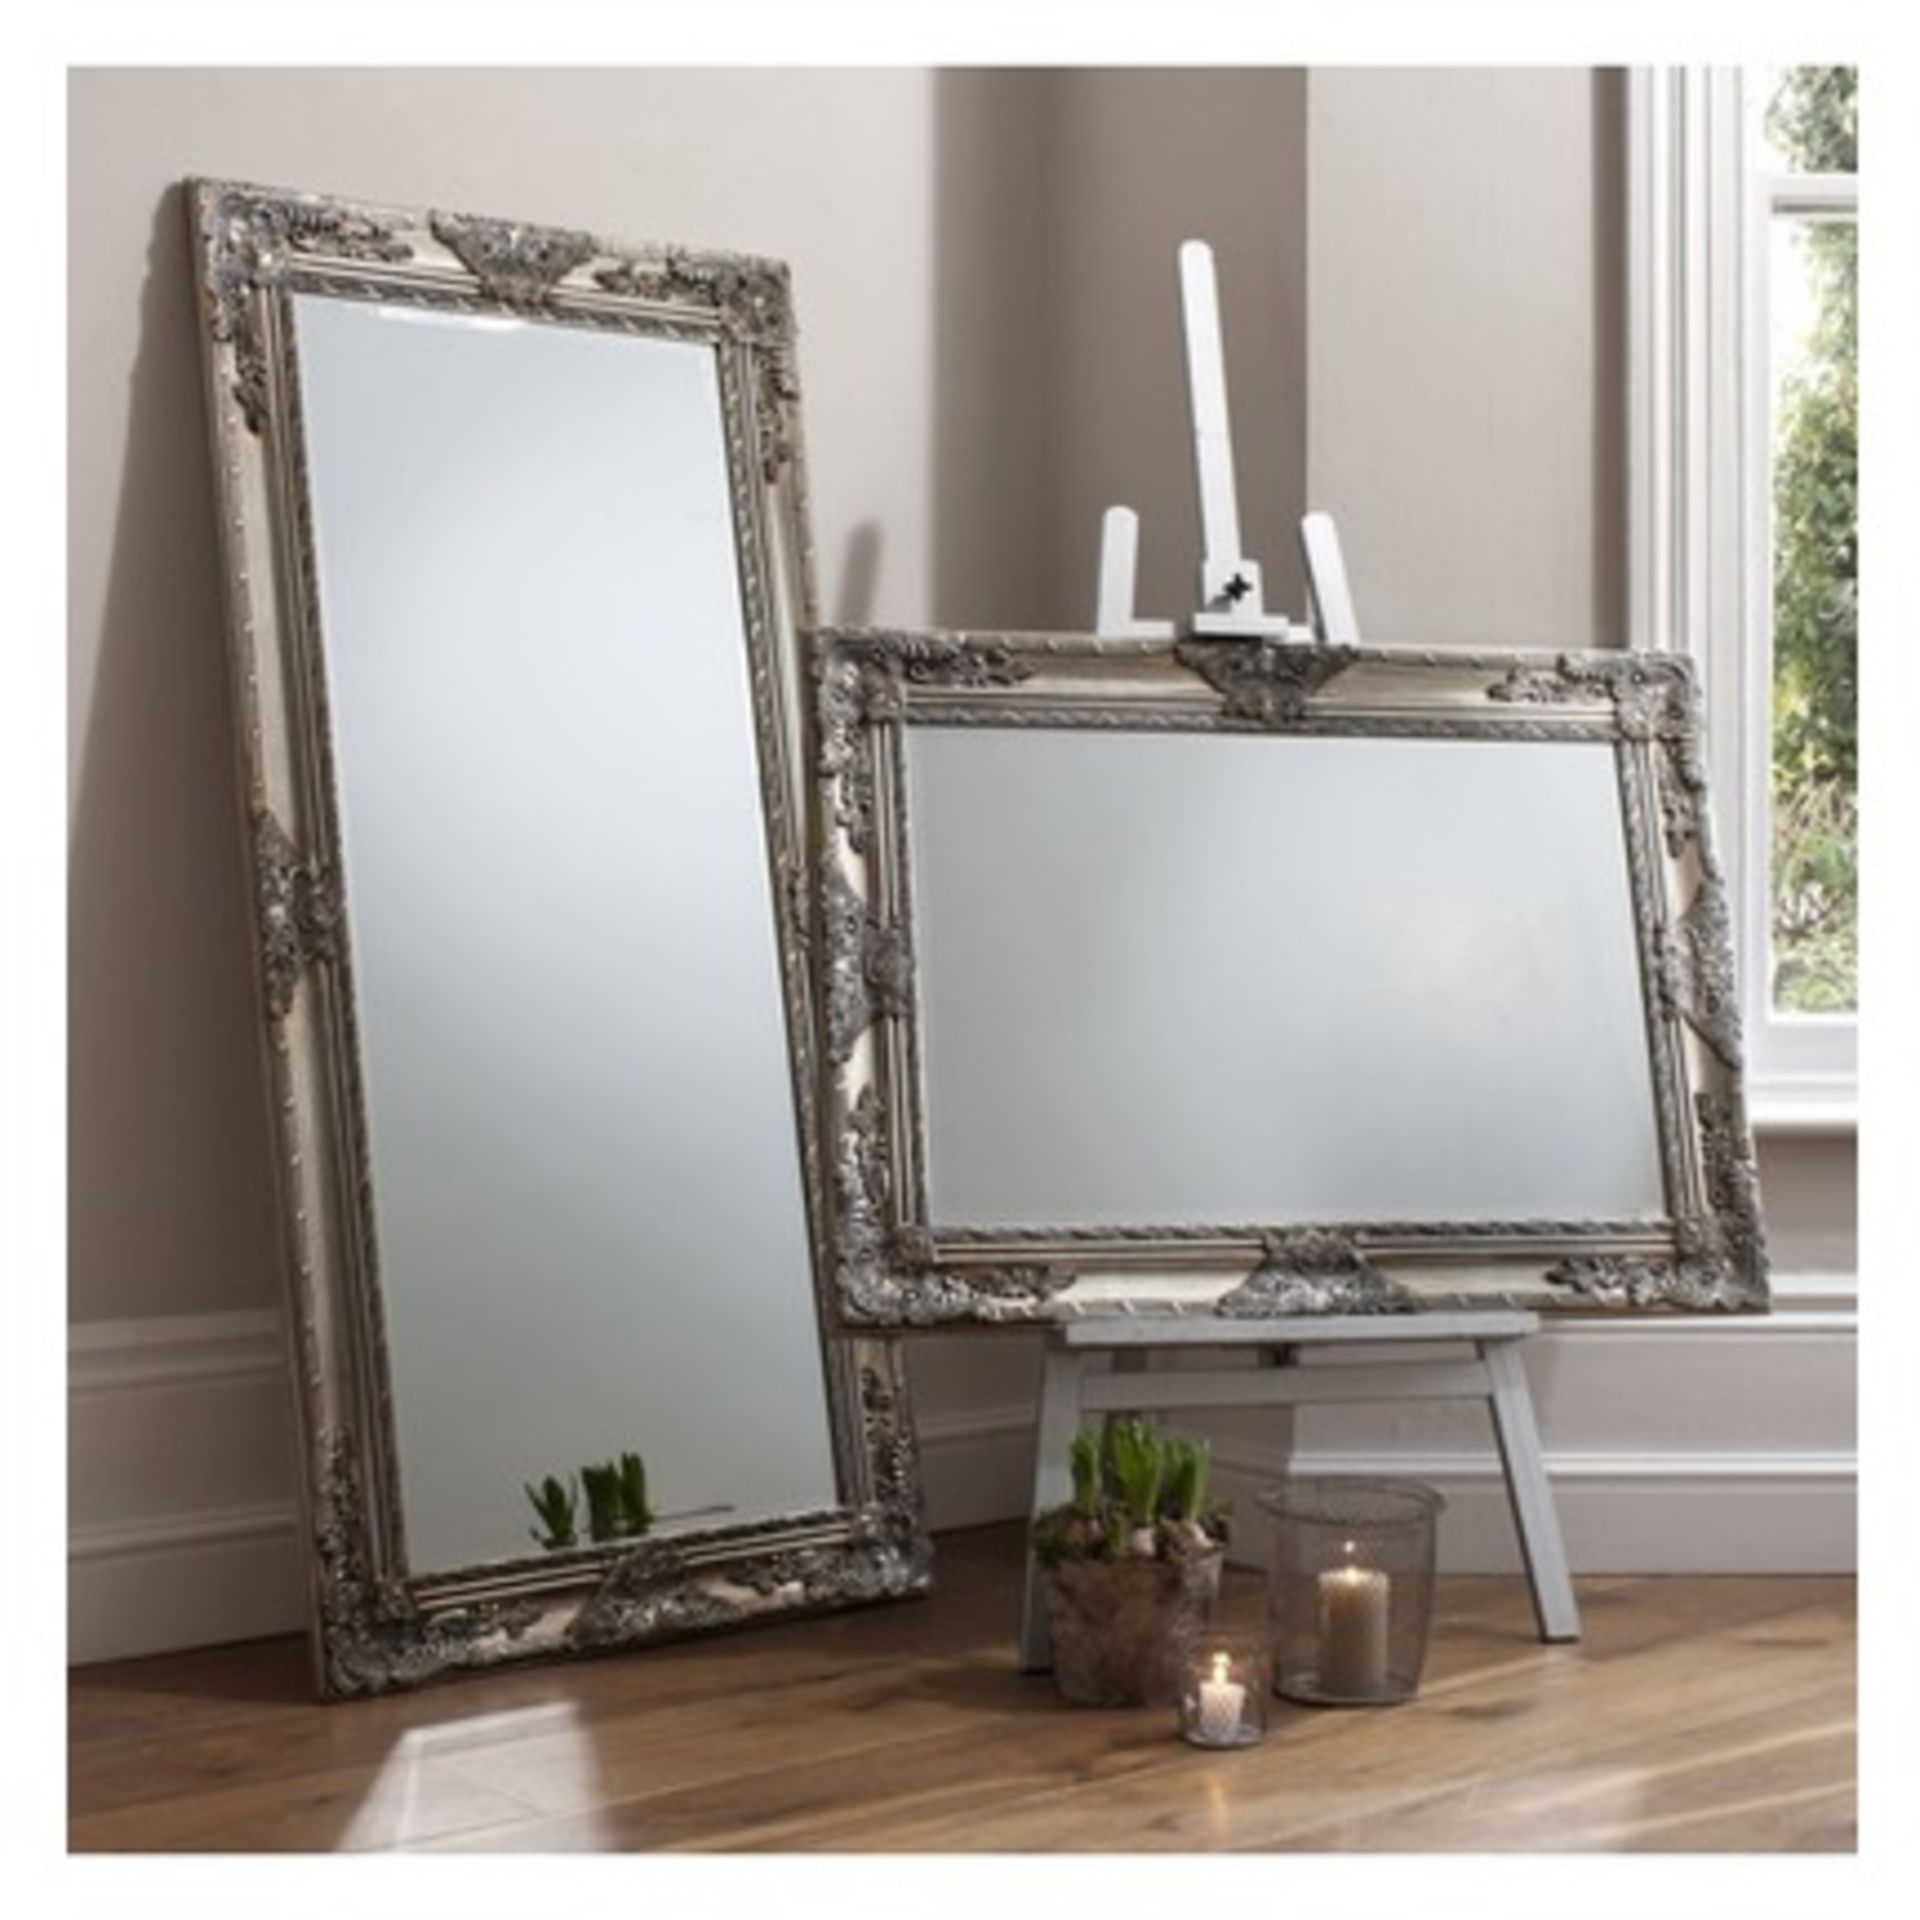 Abbey rectangle mirror